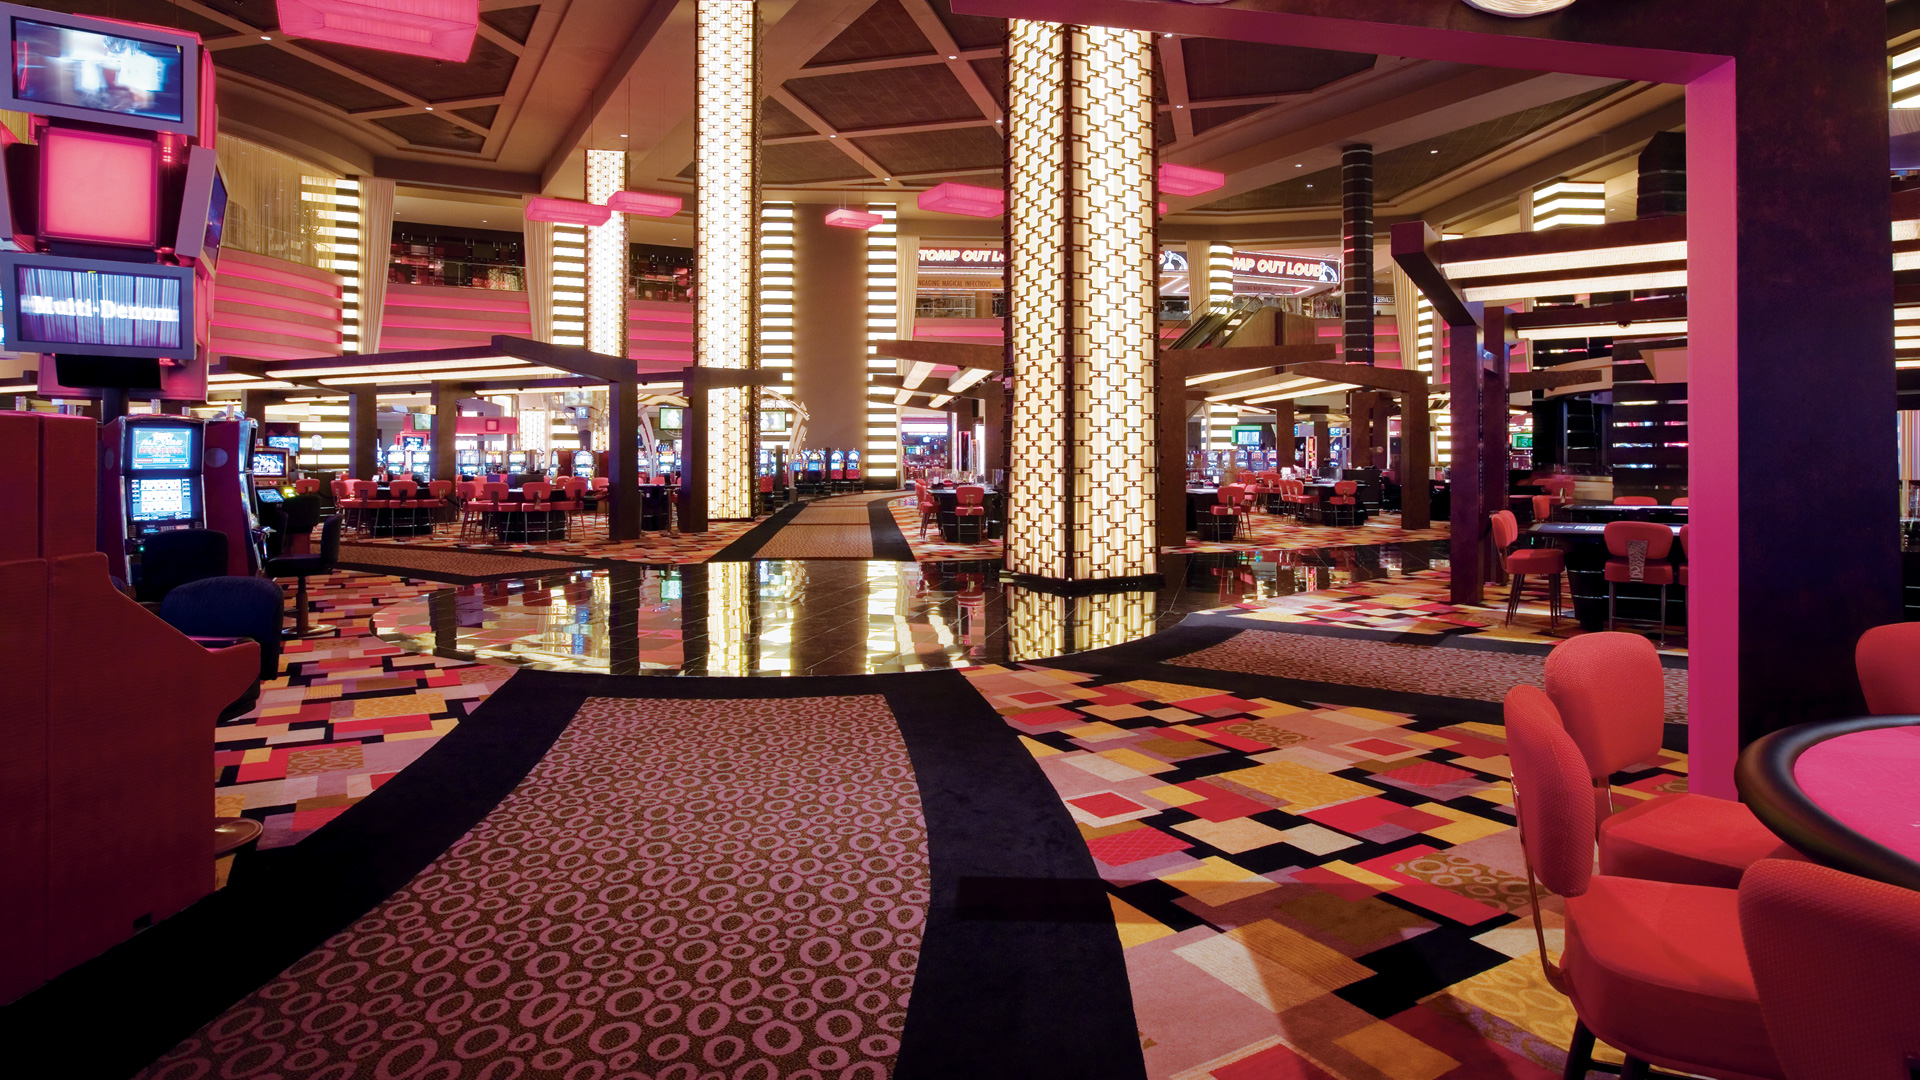 Las Vegas Pool Party Maps - Red Carpet VIP